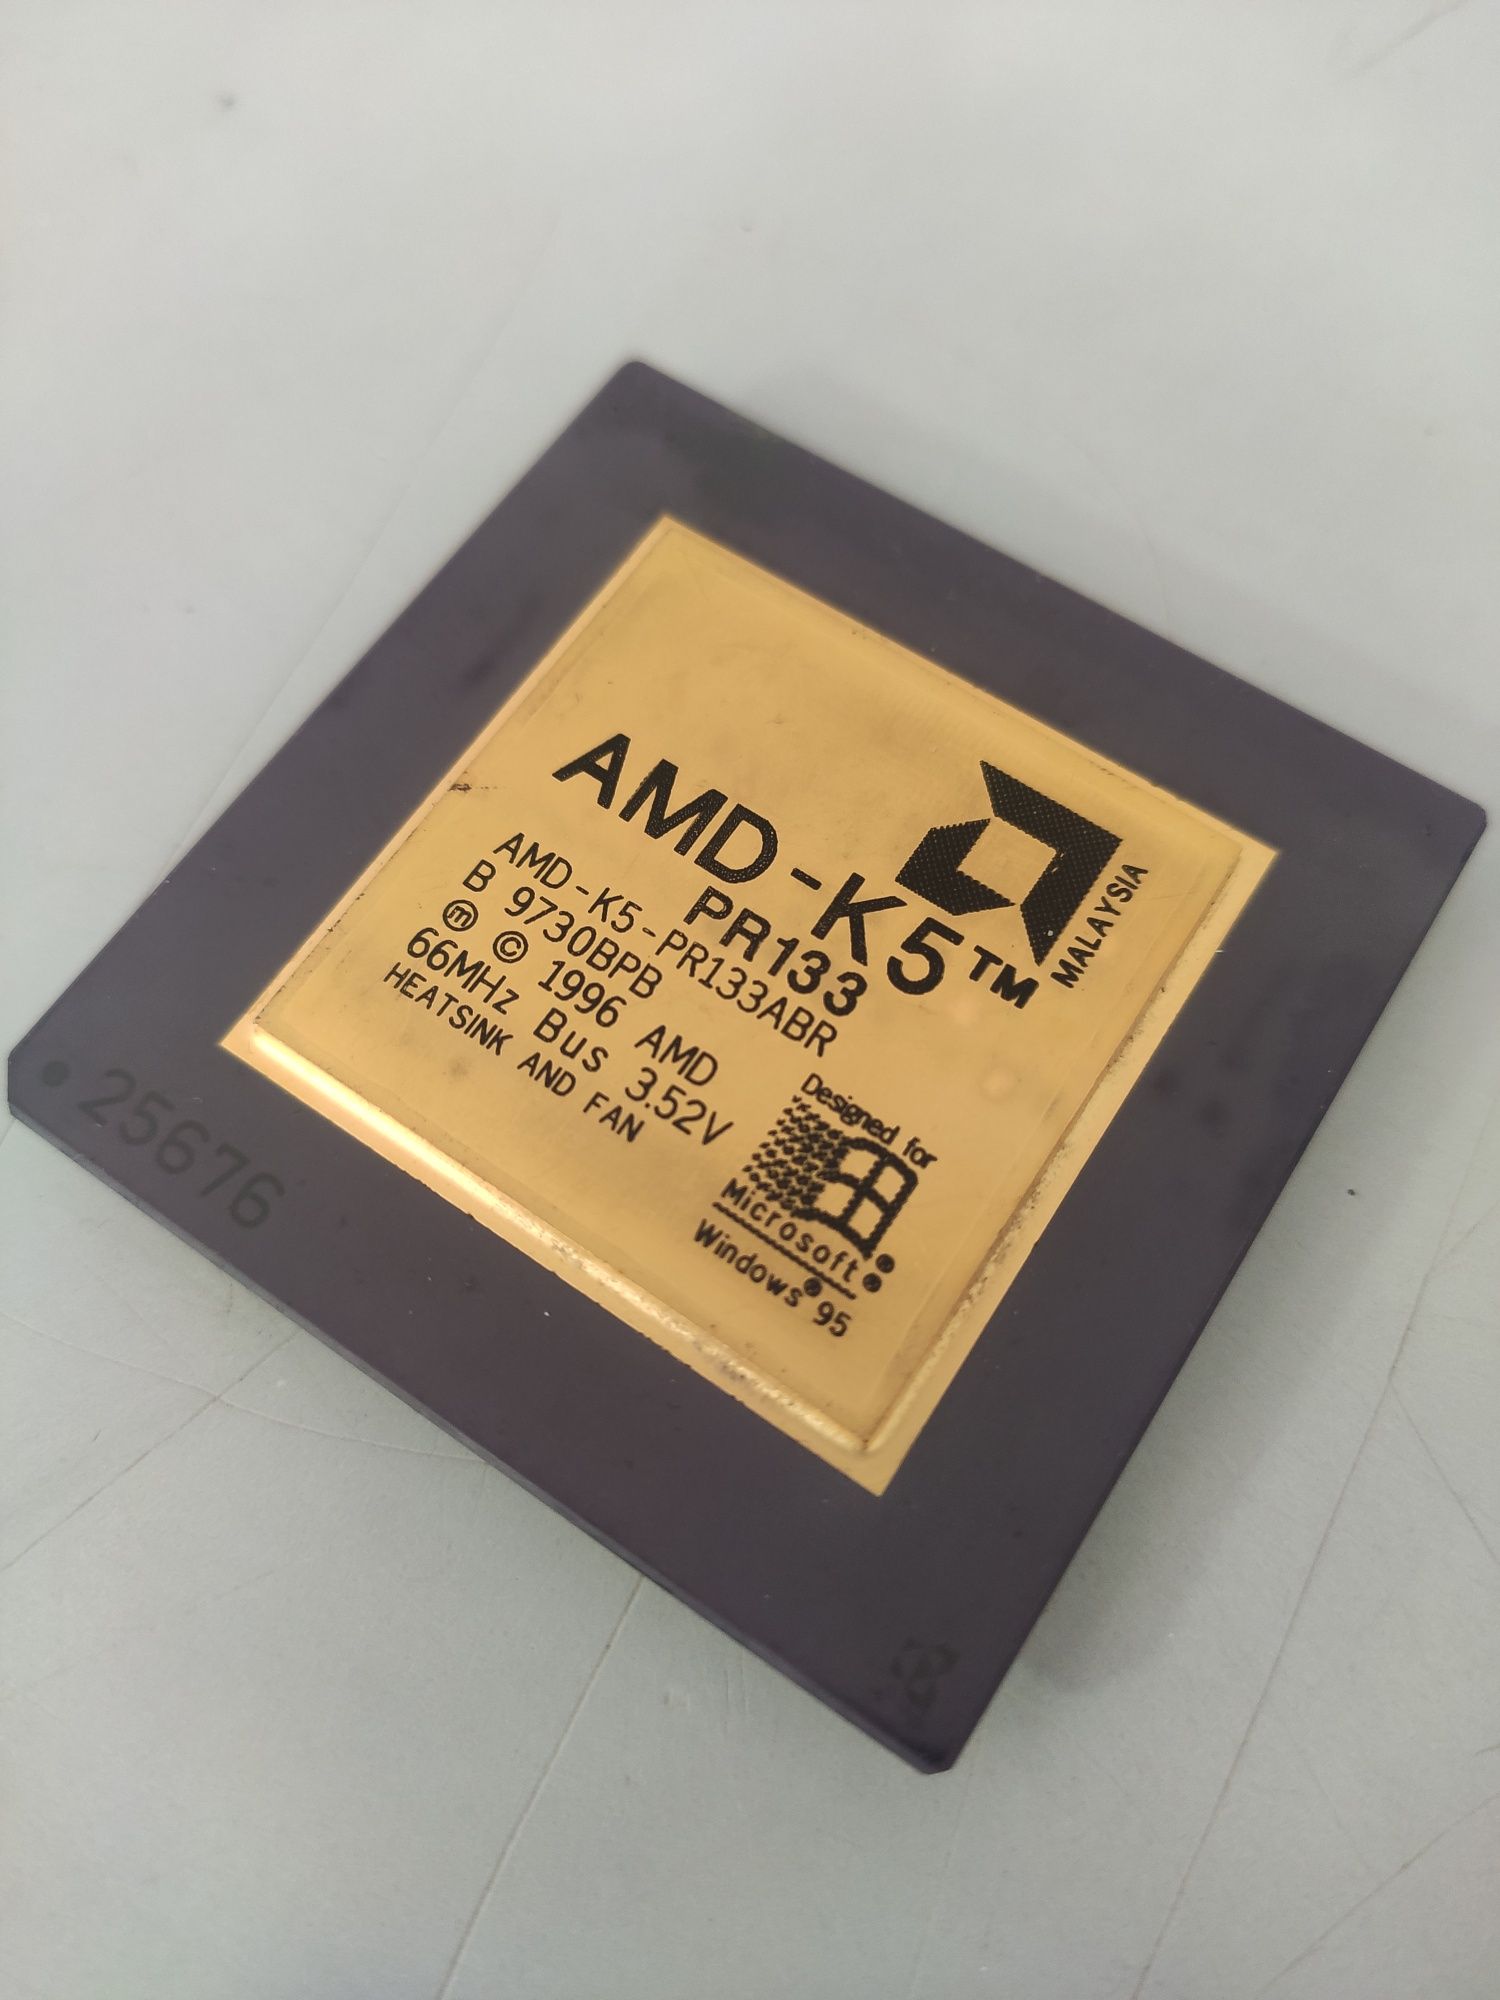 Процессор AMD-K5 PR133